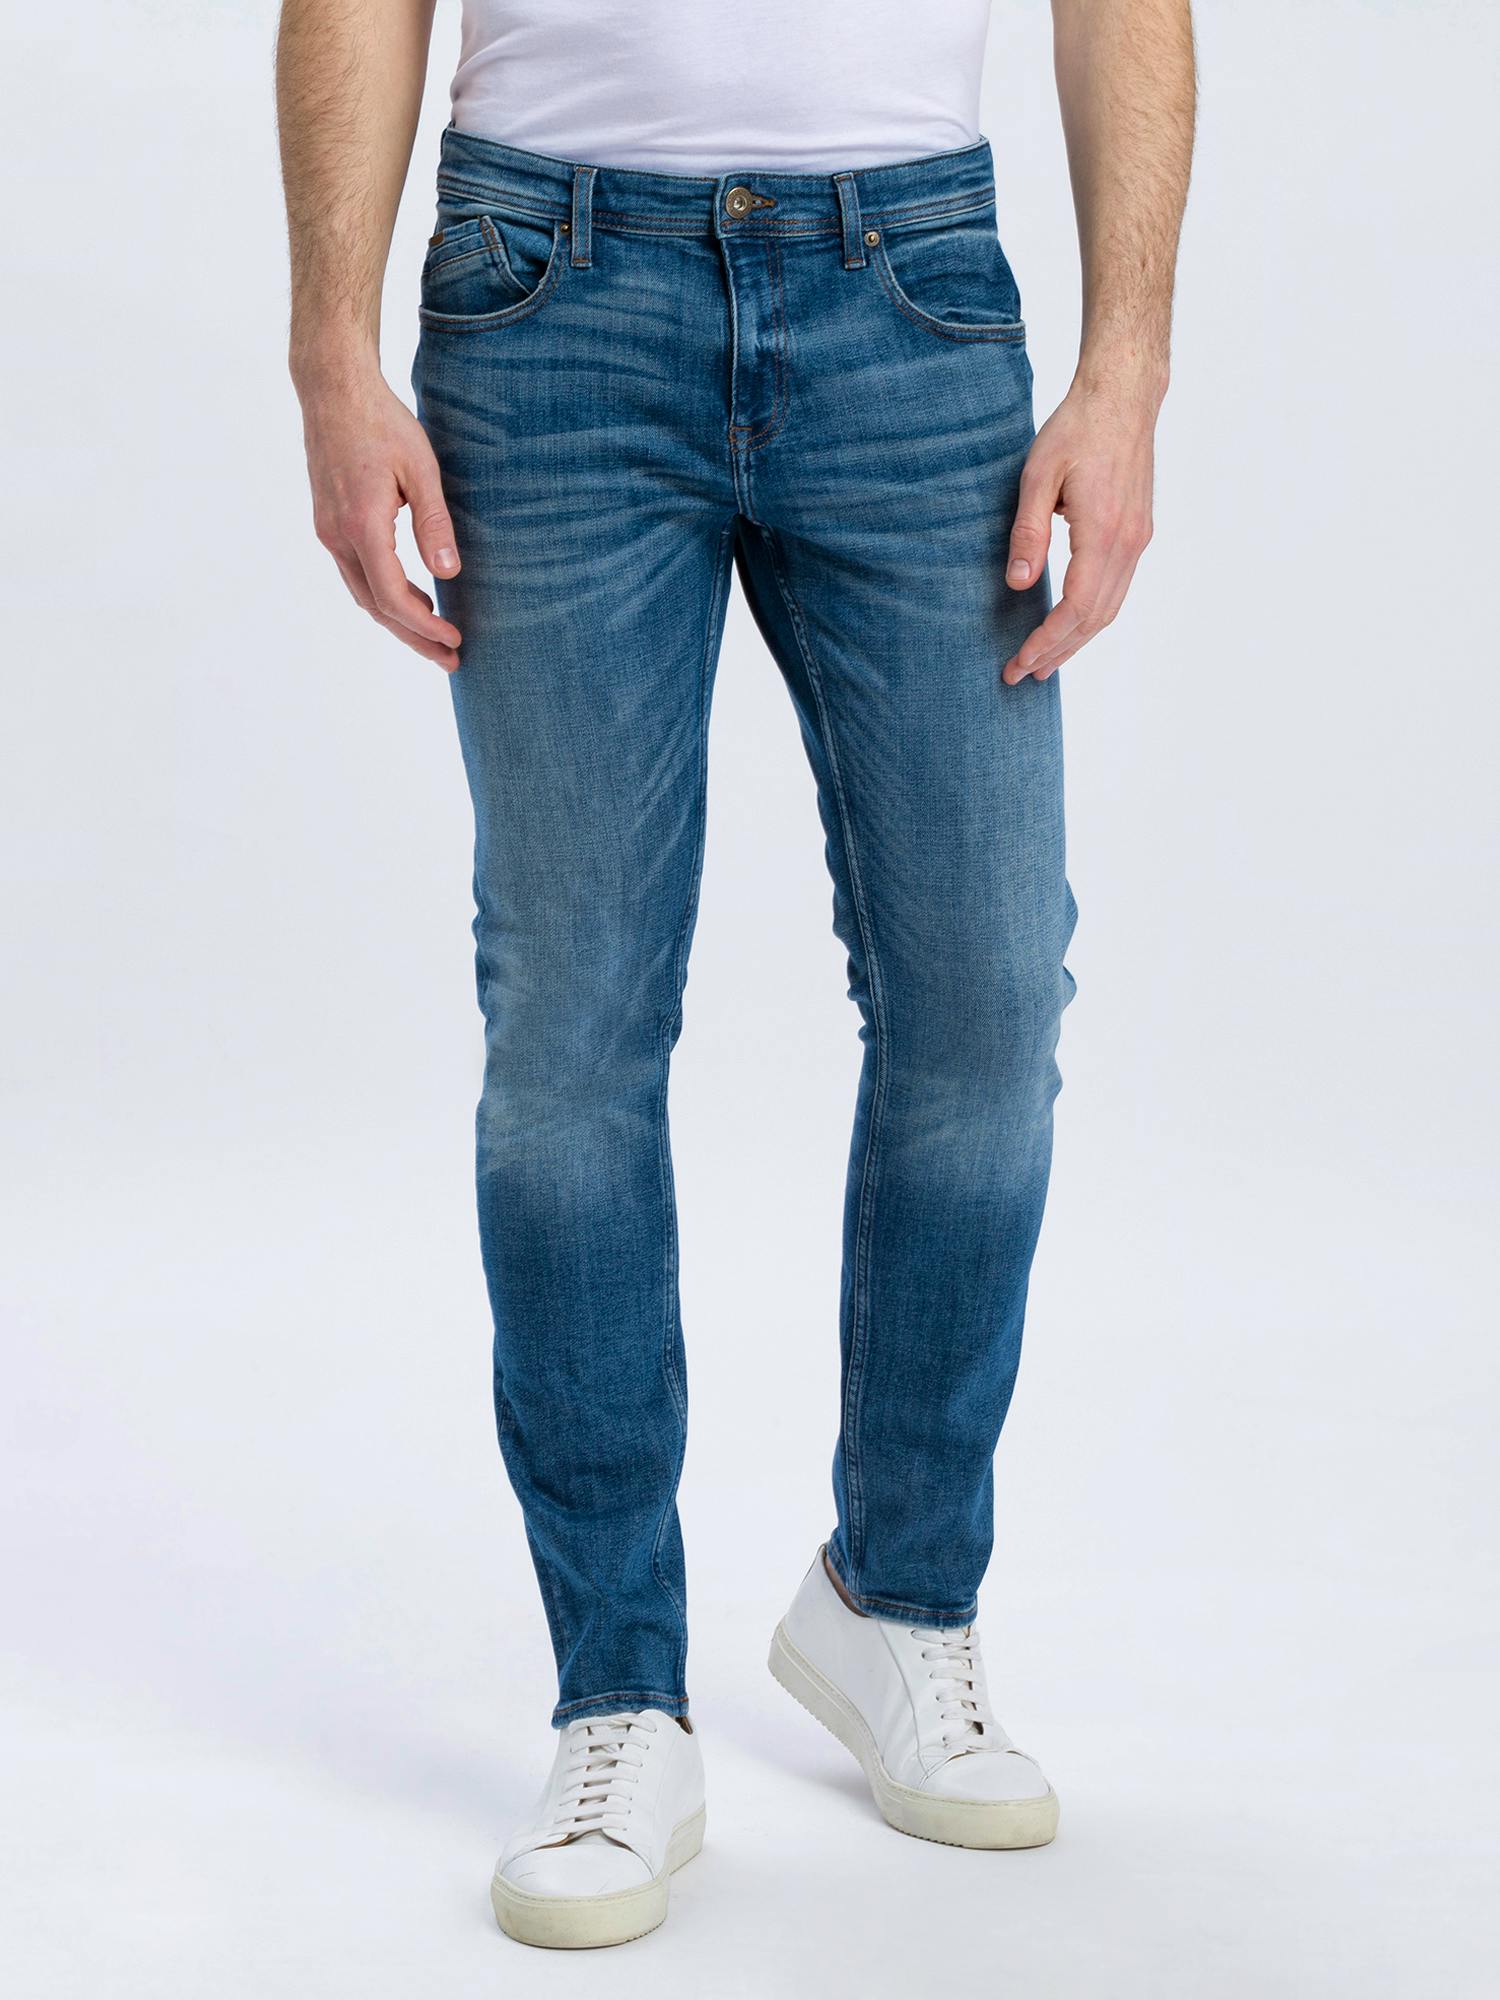 Image of Cross Jeans Jimi 5 Pocket Pants dirty blue